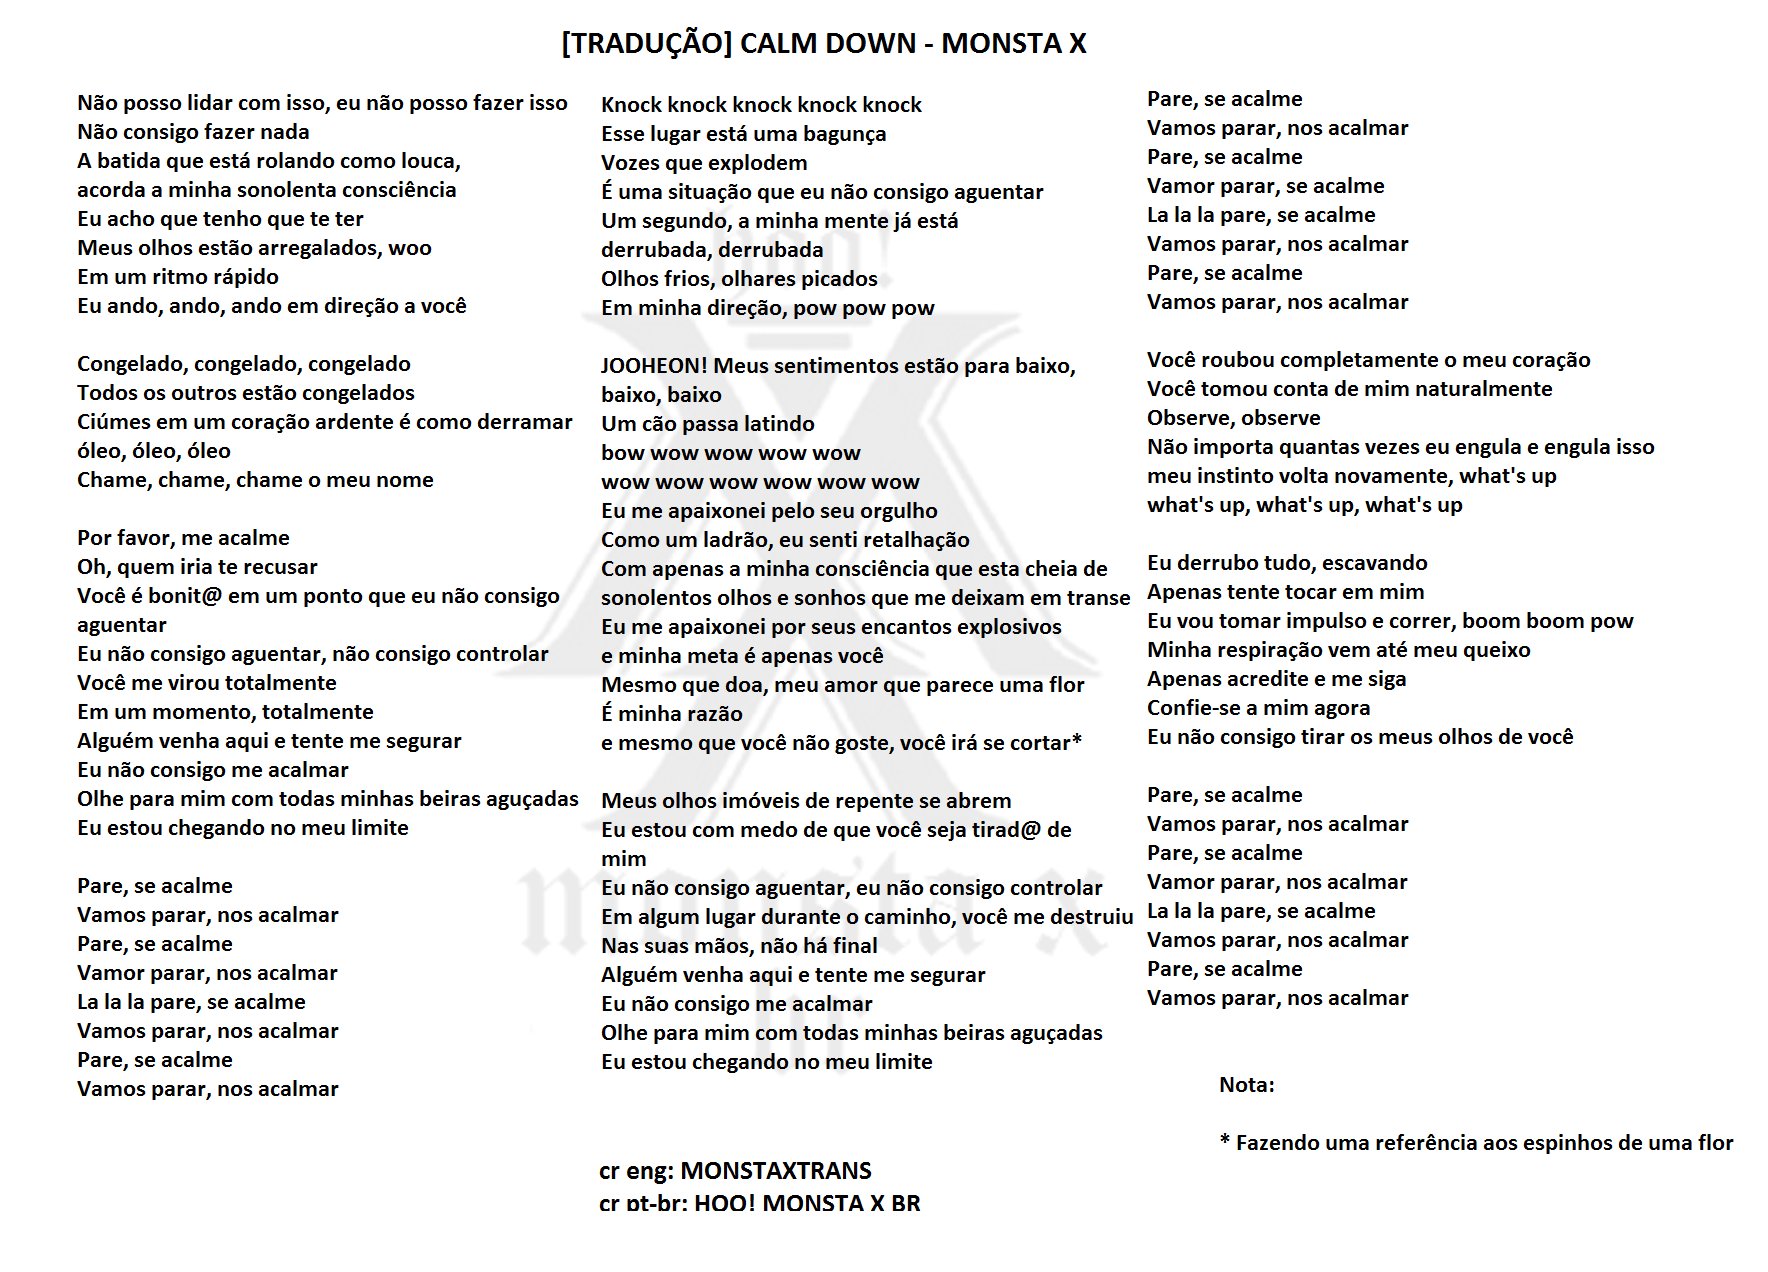 ◶ HOO! MONSTA X BR (hiatus) on X: [LETRA] Tradução da música #Incomparable  – THE CLAN part 2.5 #BEAUTIFUL (#아름다워) HQ:    / X